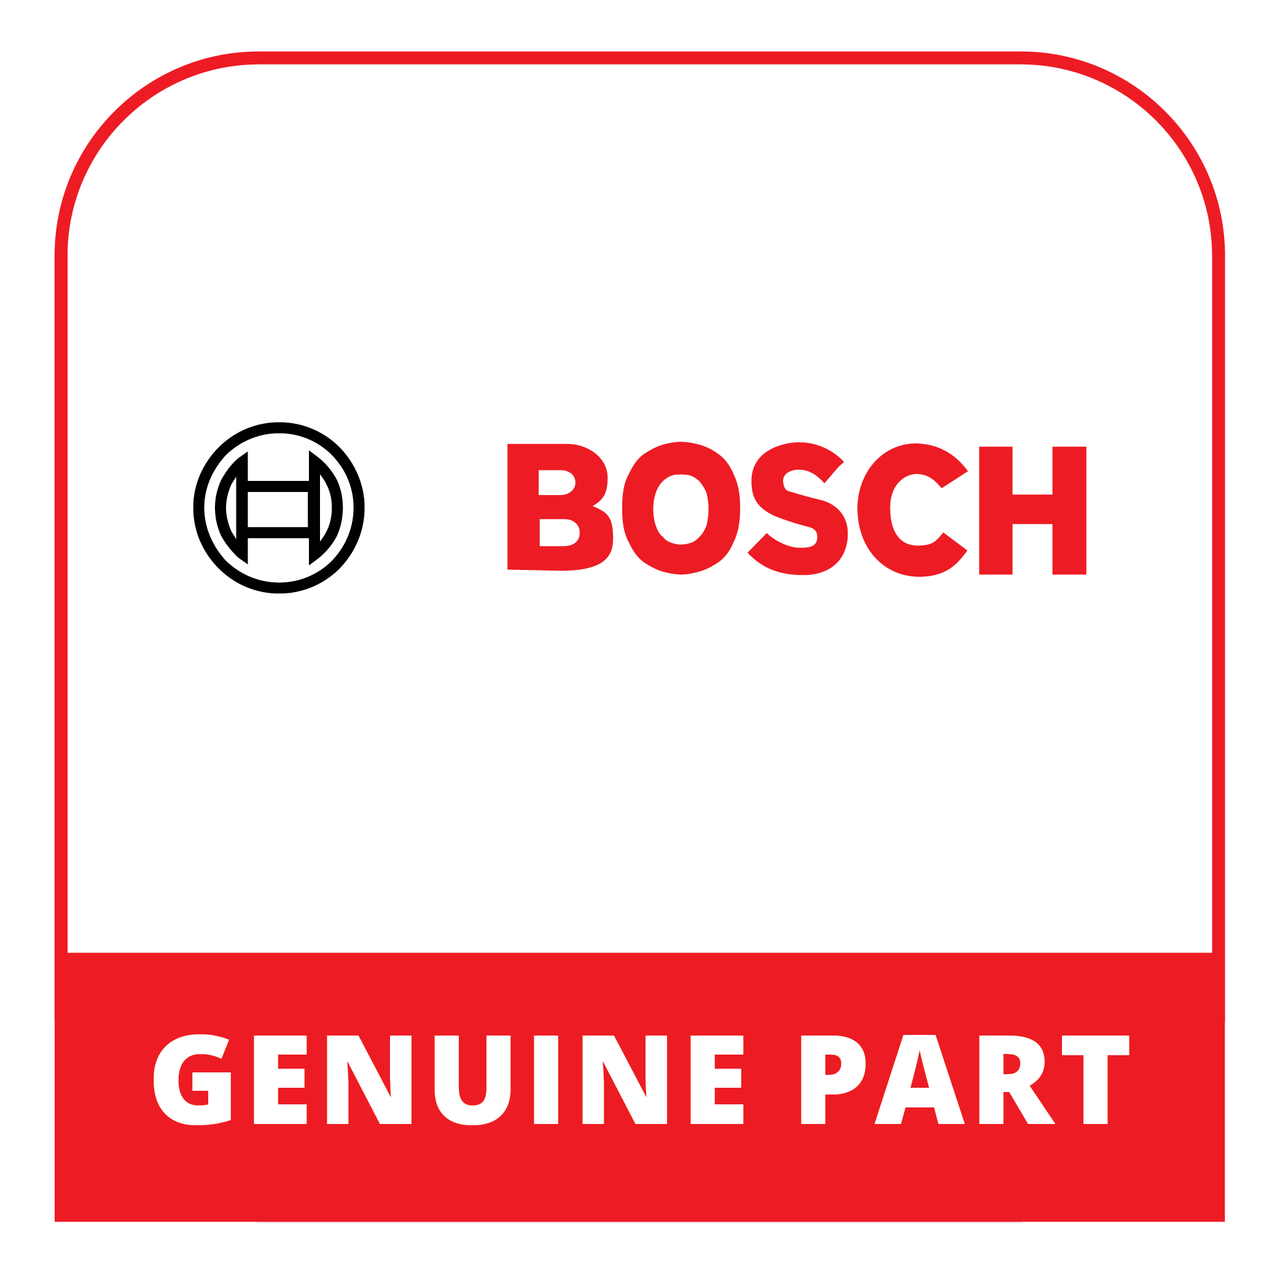 Bosch (Thermador) 18060001 - Instruction Manual Gaggenau - Genuine Bosch (Thermador) Part